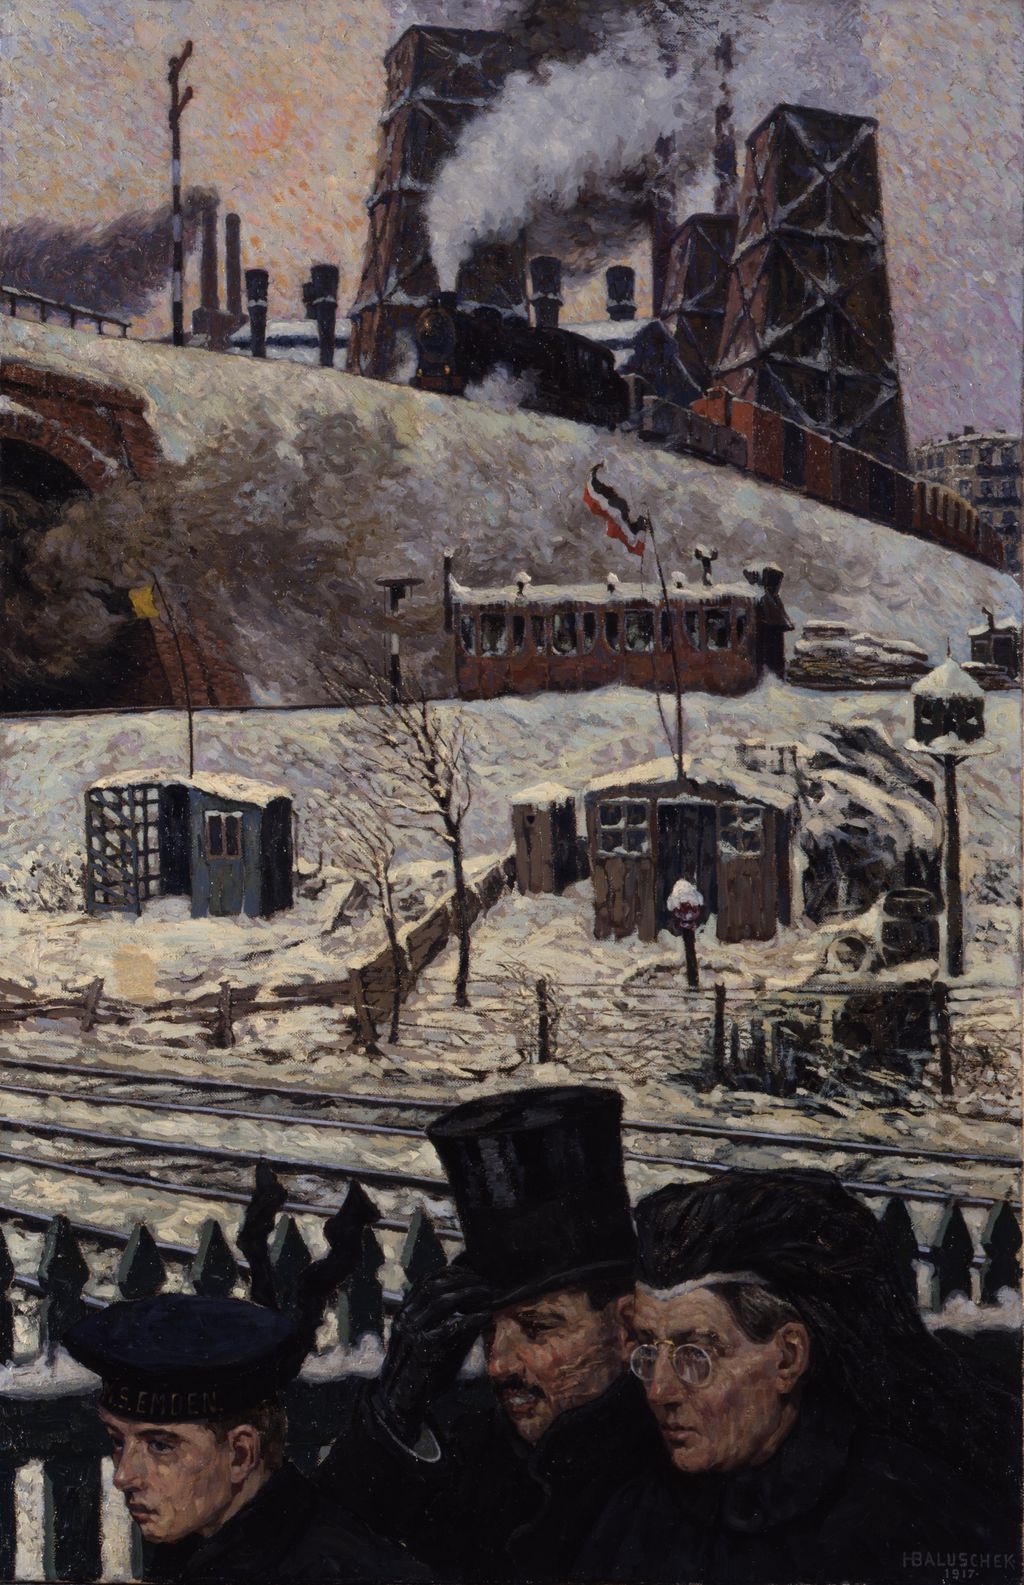 Exponat: Gemälde: Baluschek, Hans "Kriegswinter", 1917